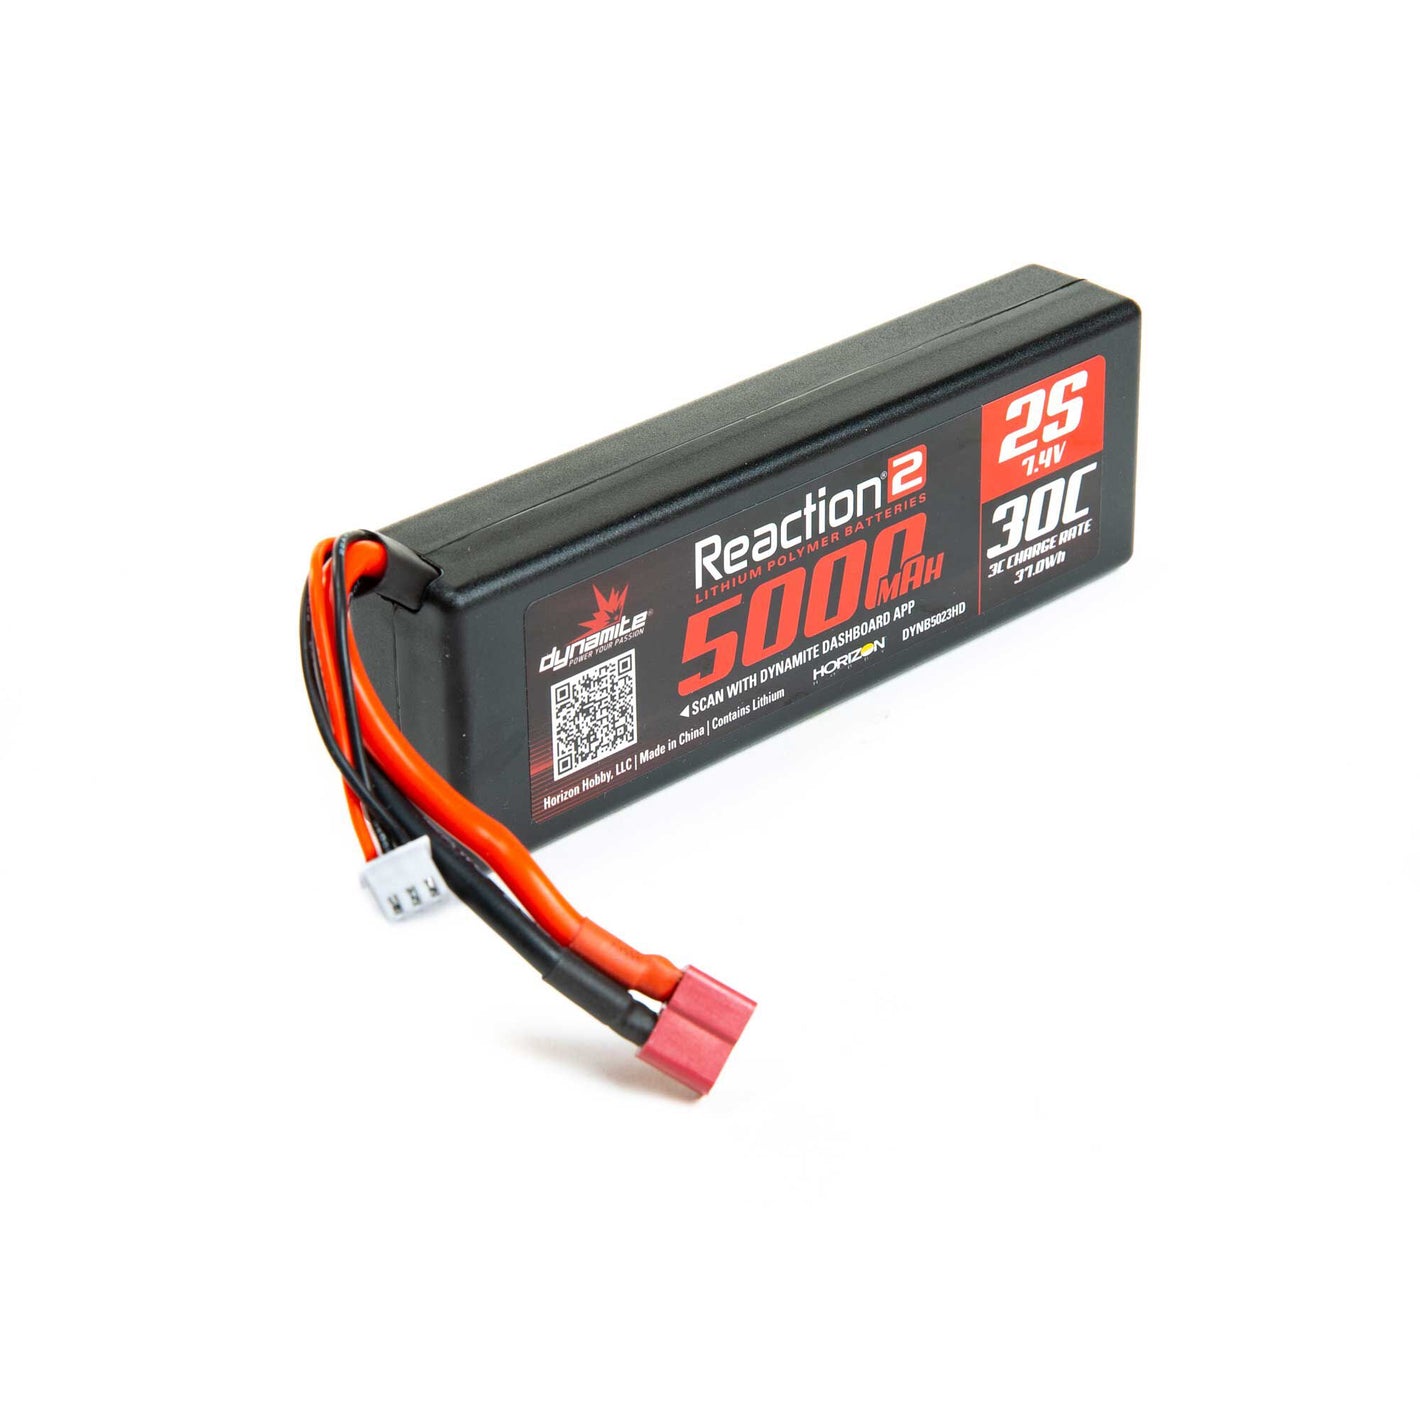 Dynamite 7.4V 5000mAh 2S 30C Reaction 2.0 Hardcase LiPo Battery: Deans DYNB5023HD